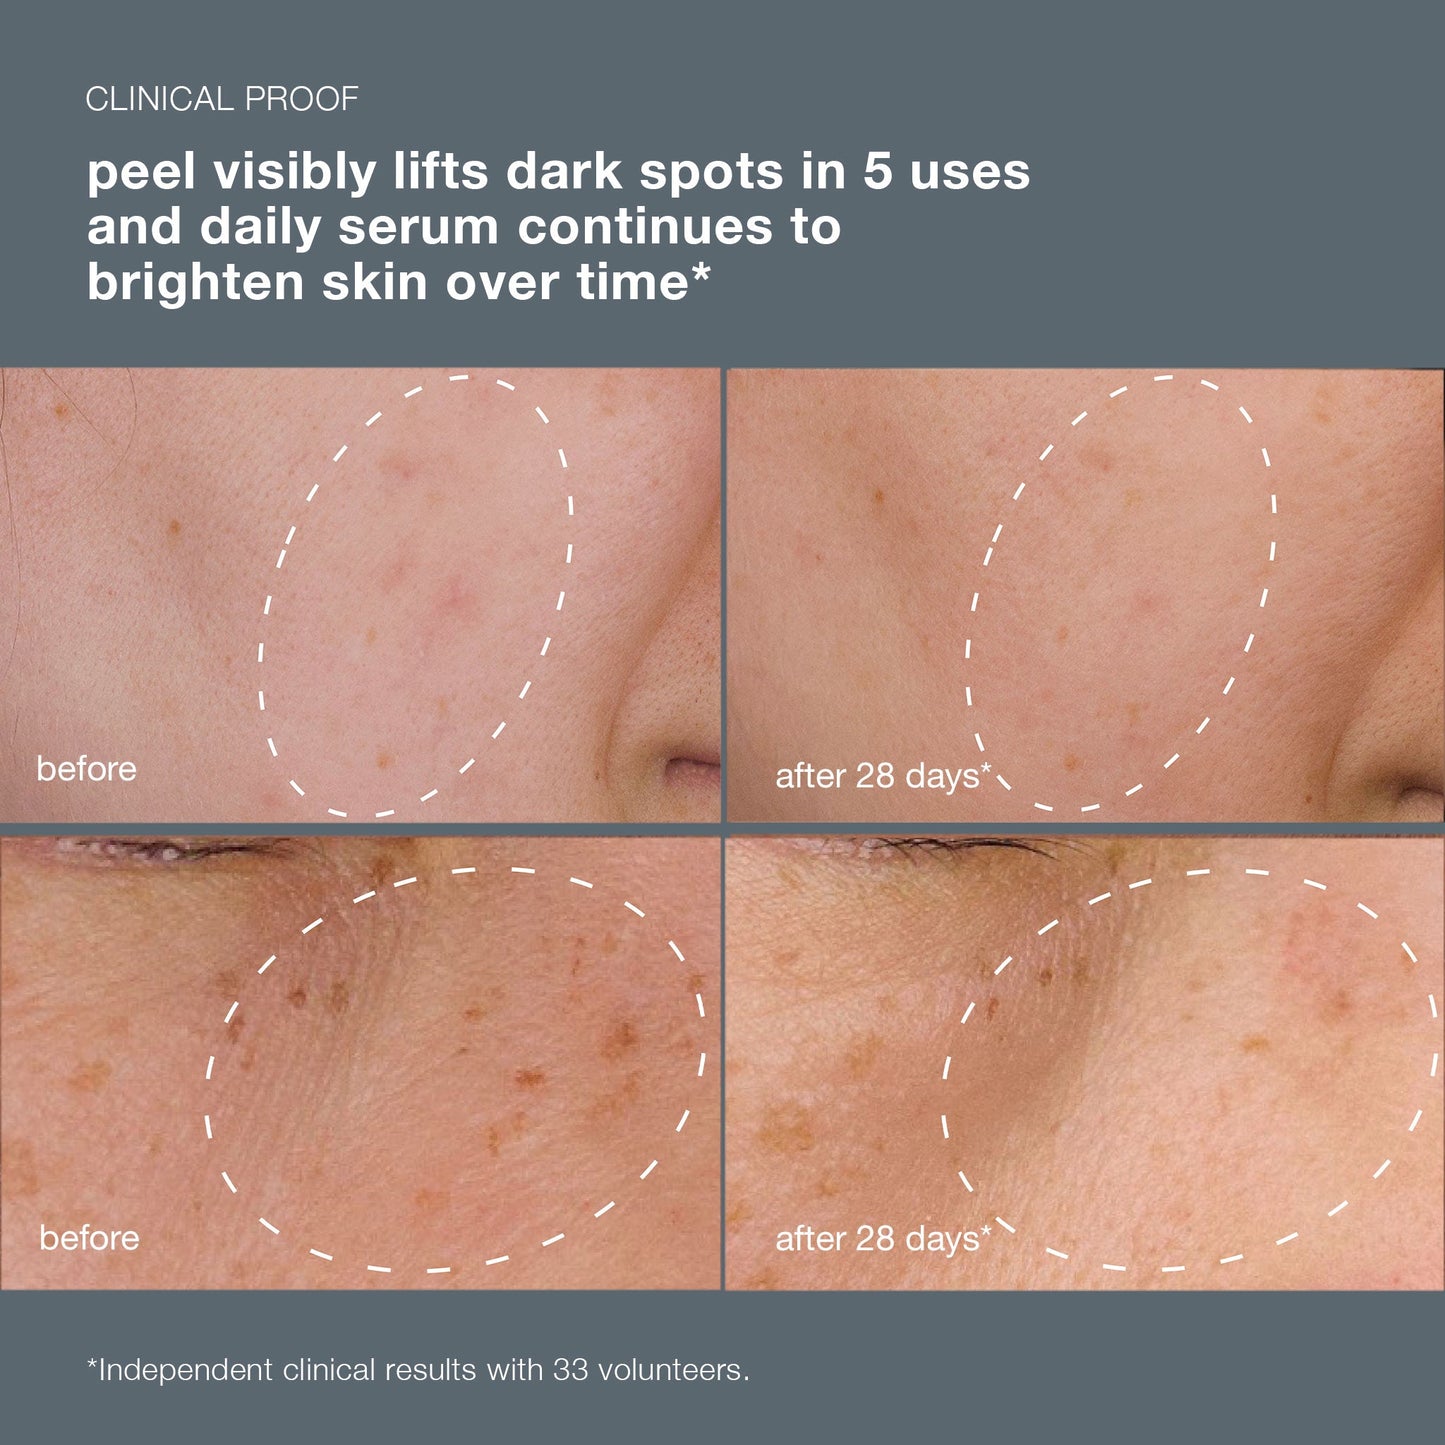 powerbright dark spot system clinical claim